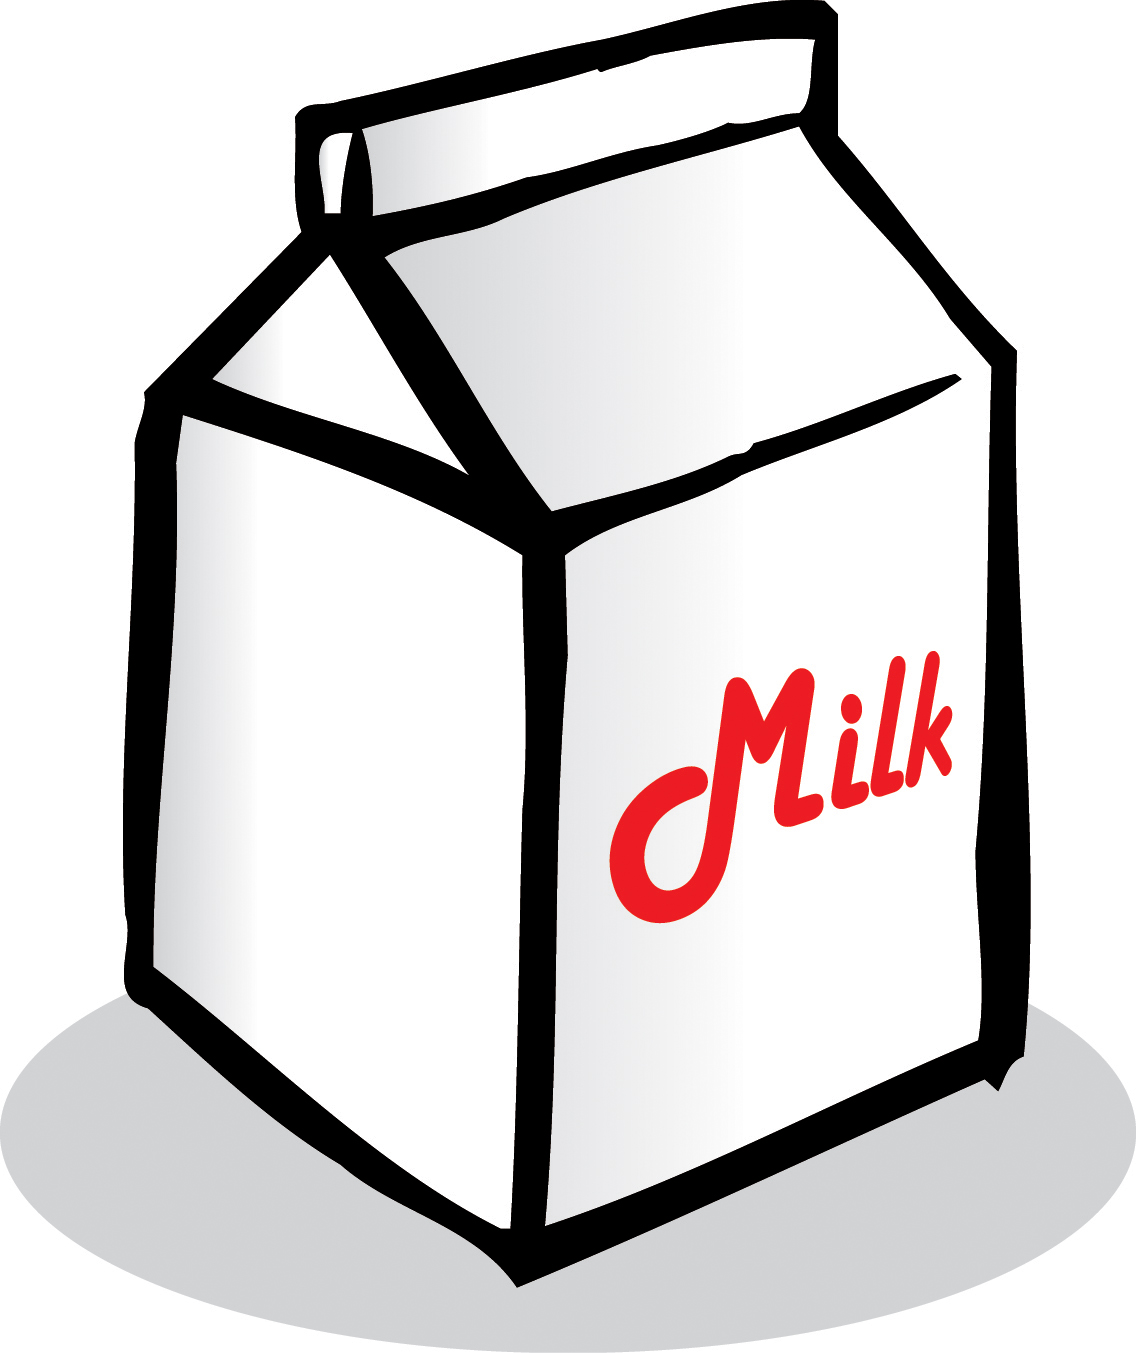 Milk Carton Image 